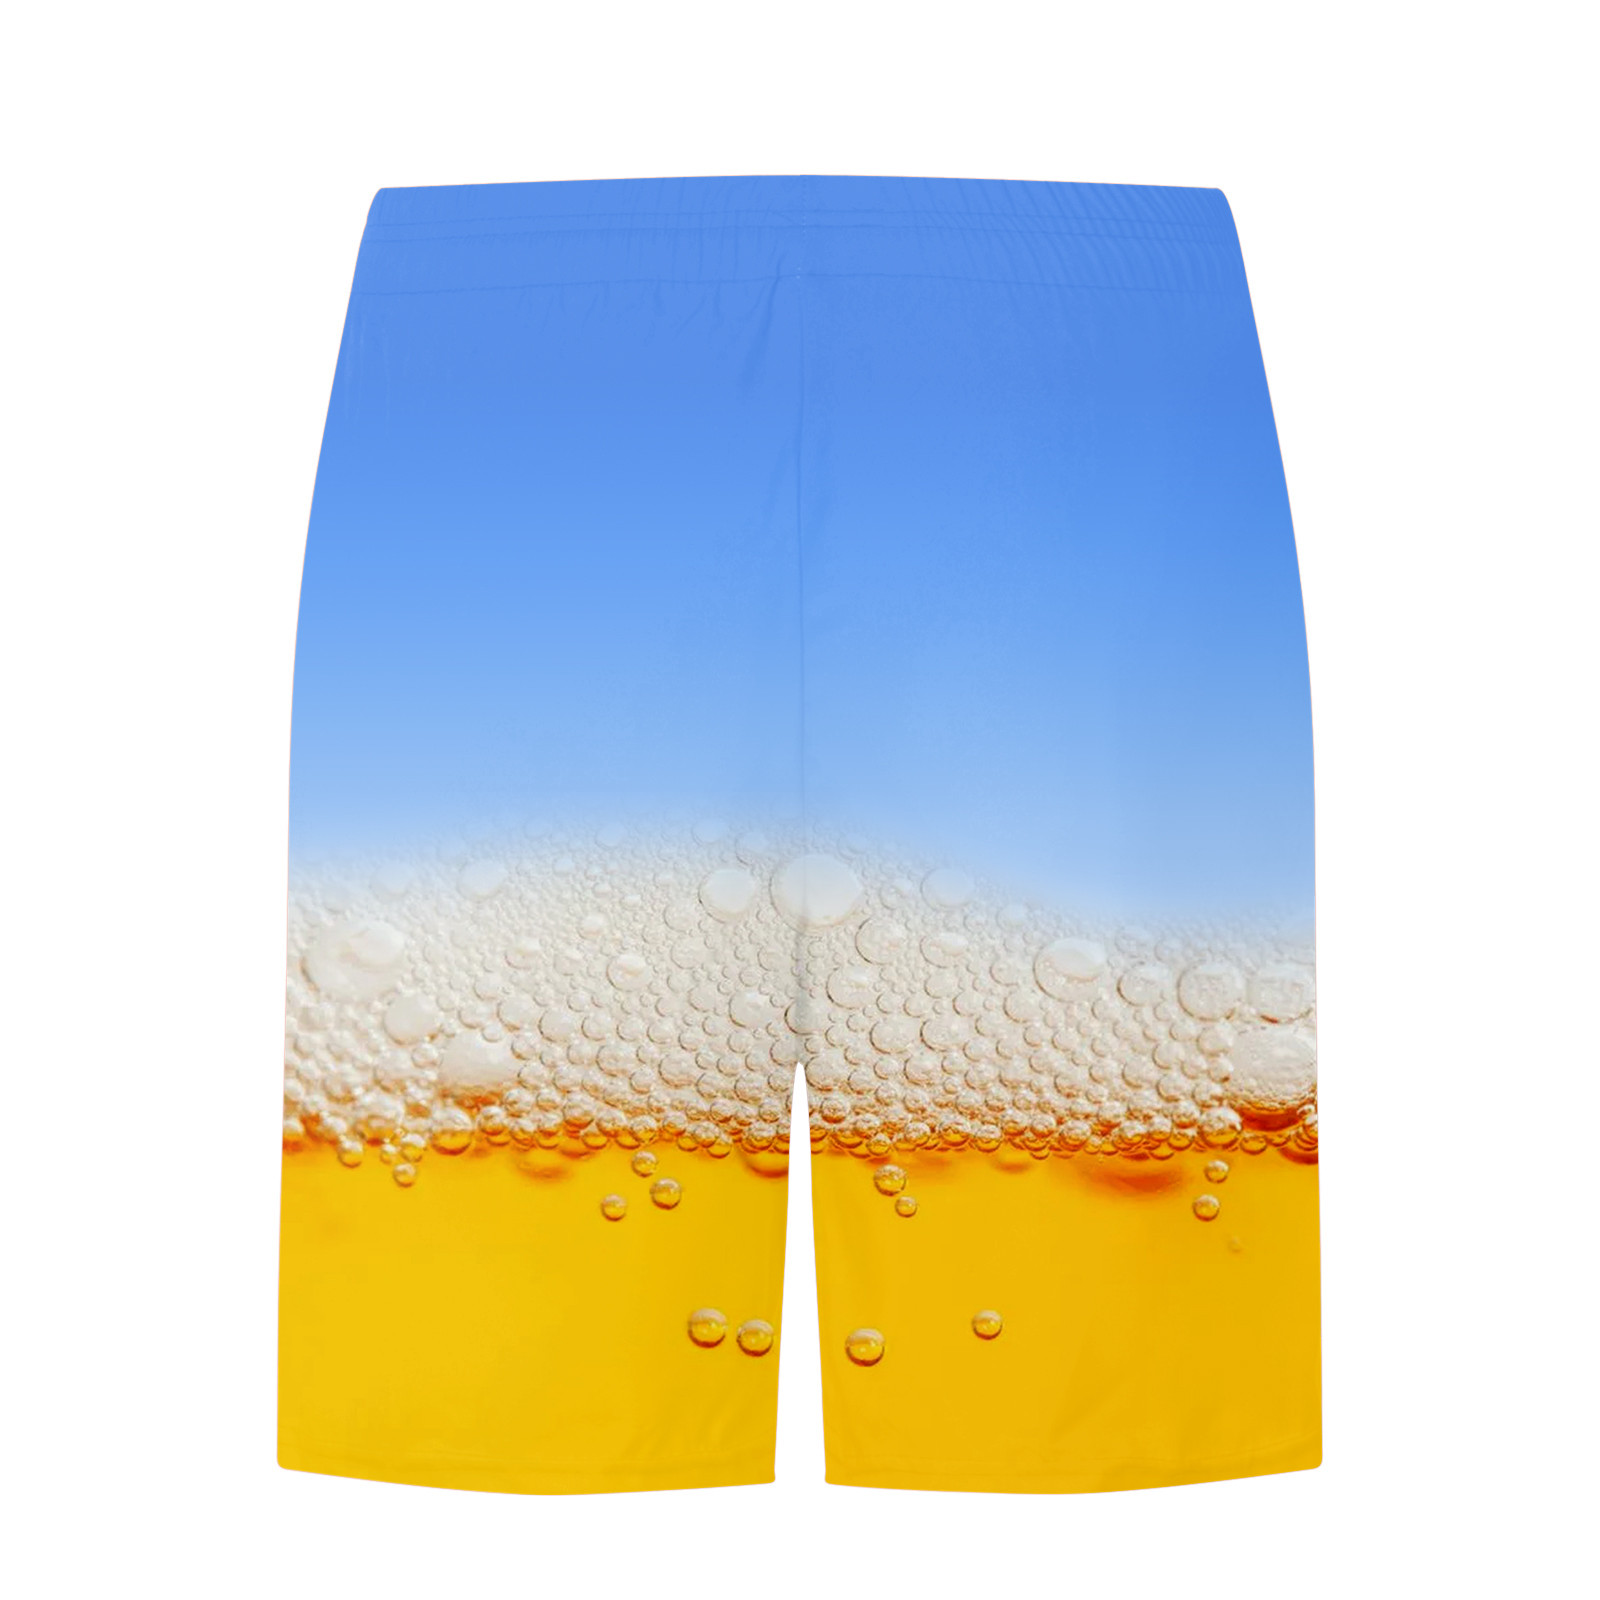 PEONAVET Mens Swim Trunks Quick Dry Beach Shorts Independence Day ...